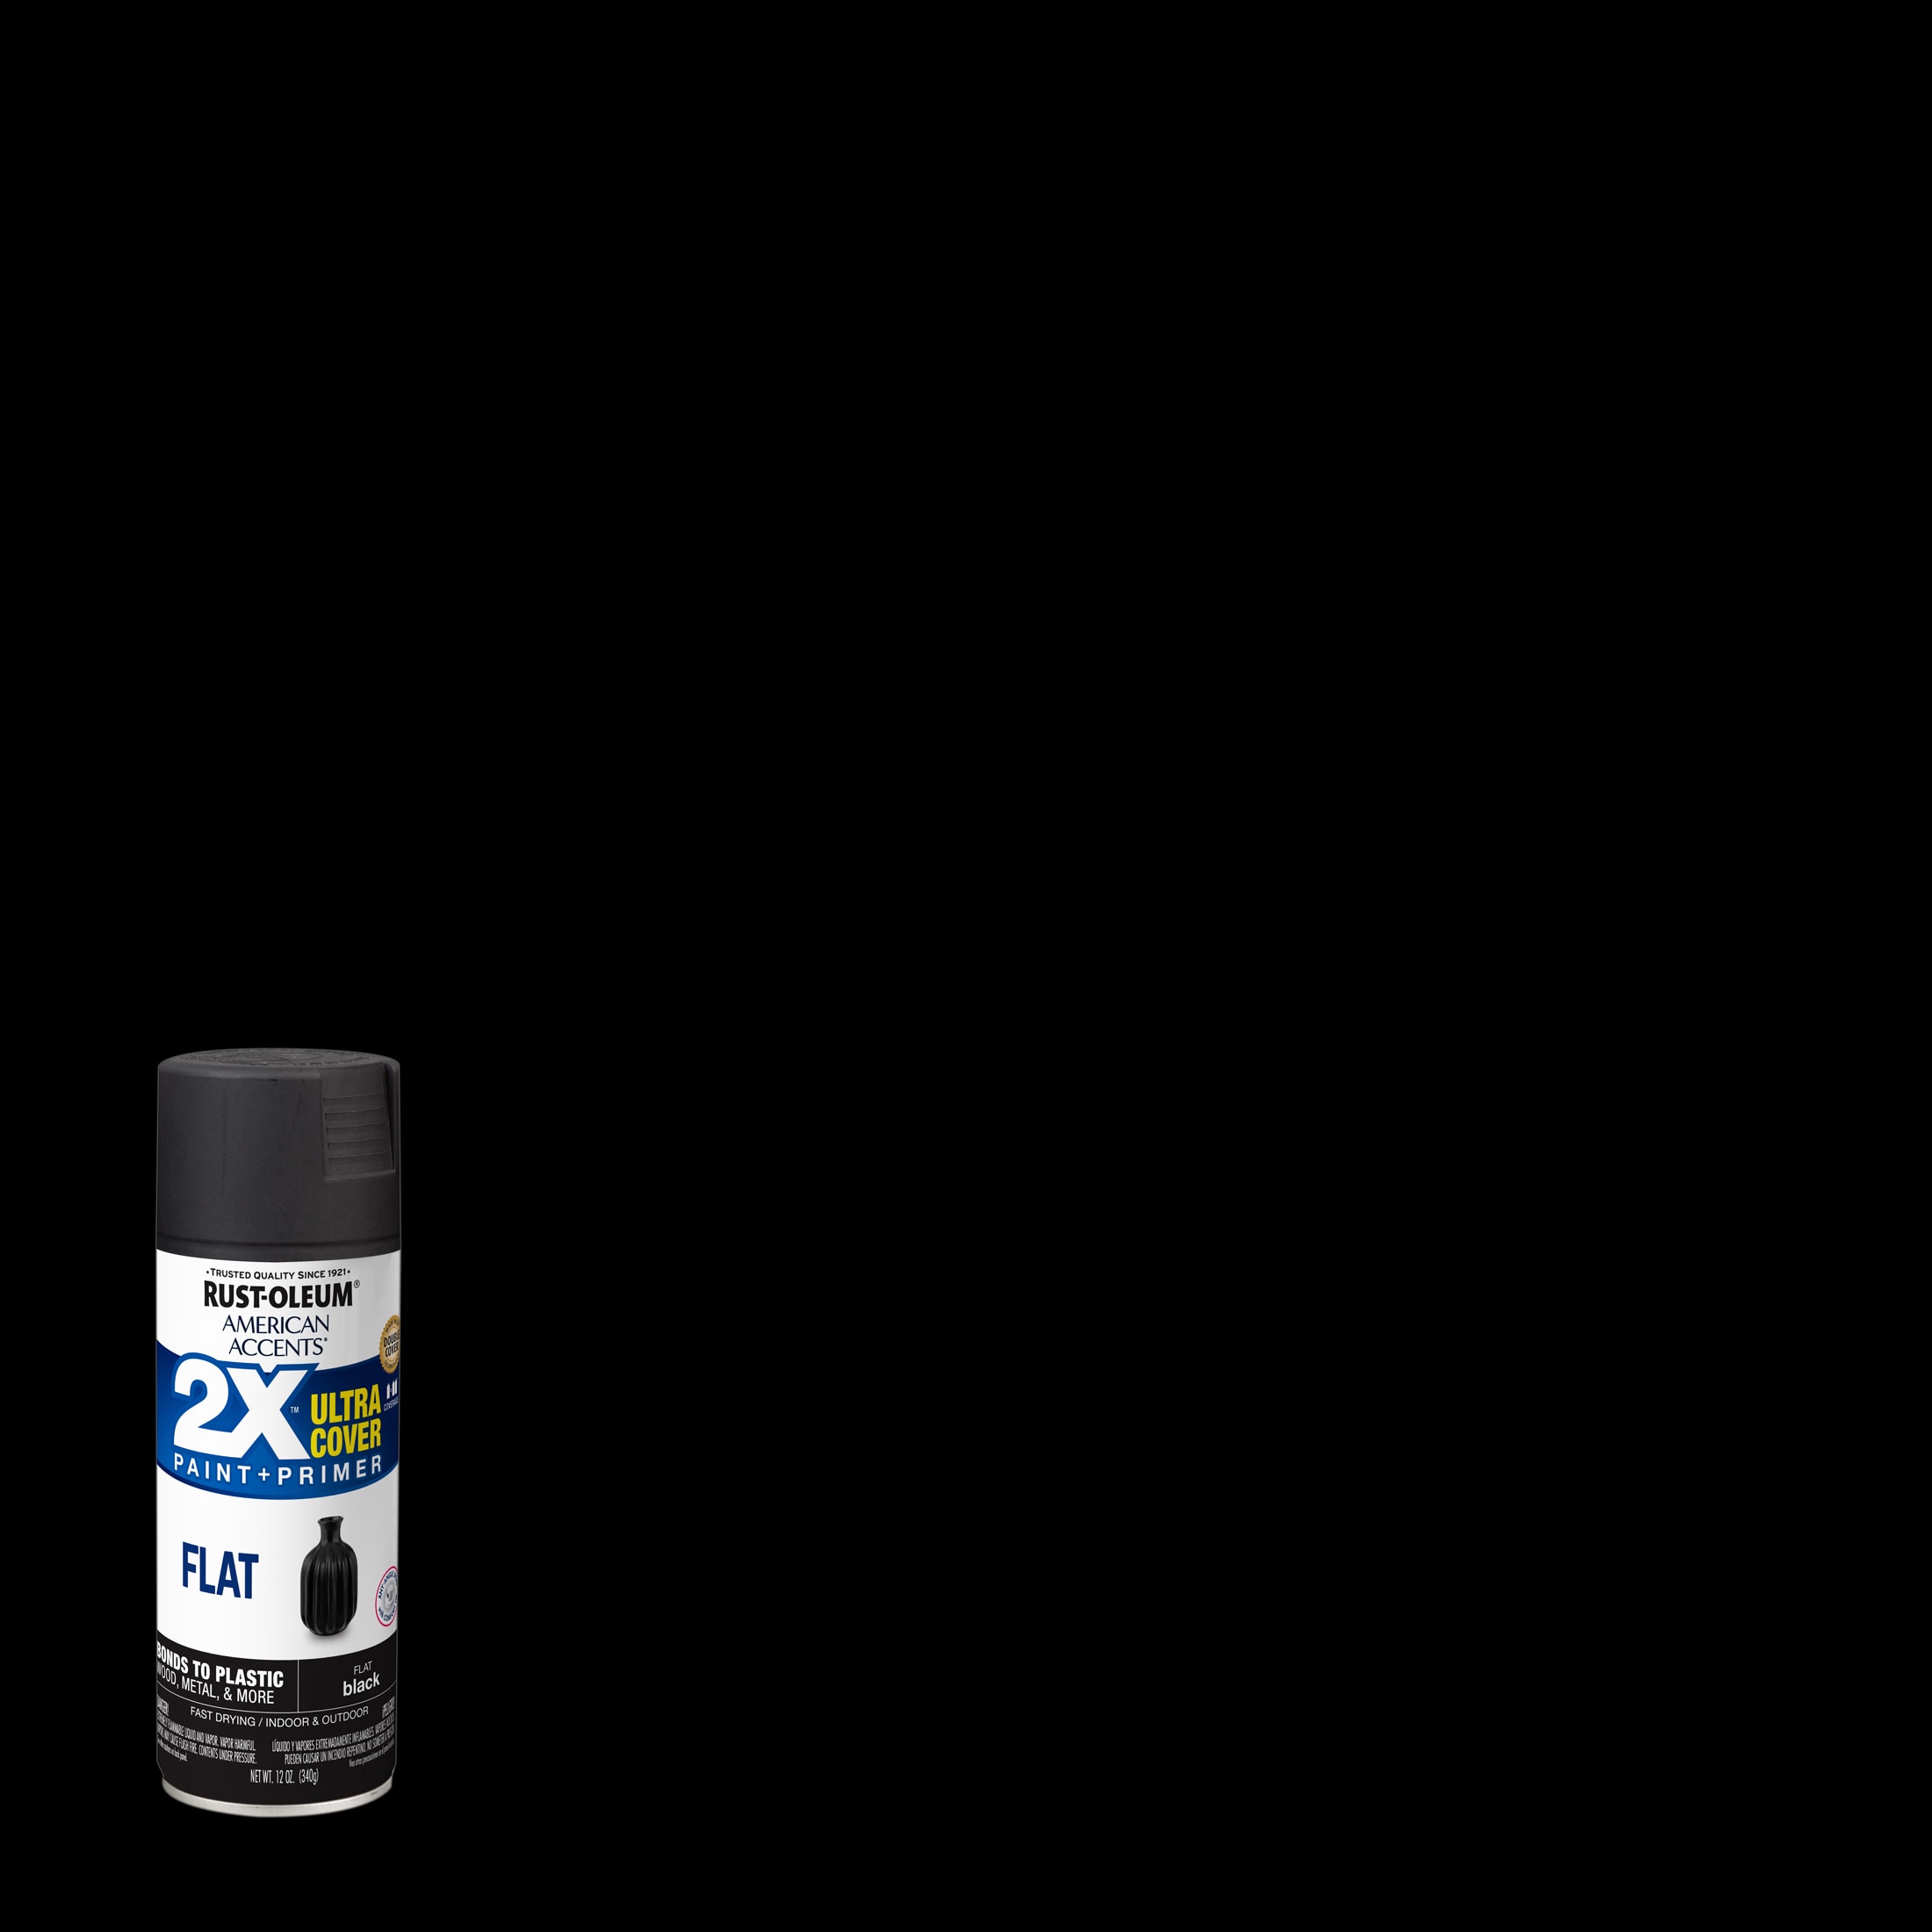 Rust-Oleum White American Accents 2x Ultra Cover Primer Spray - 12 oz